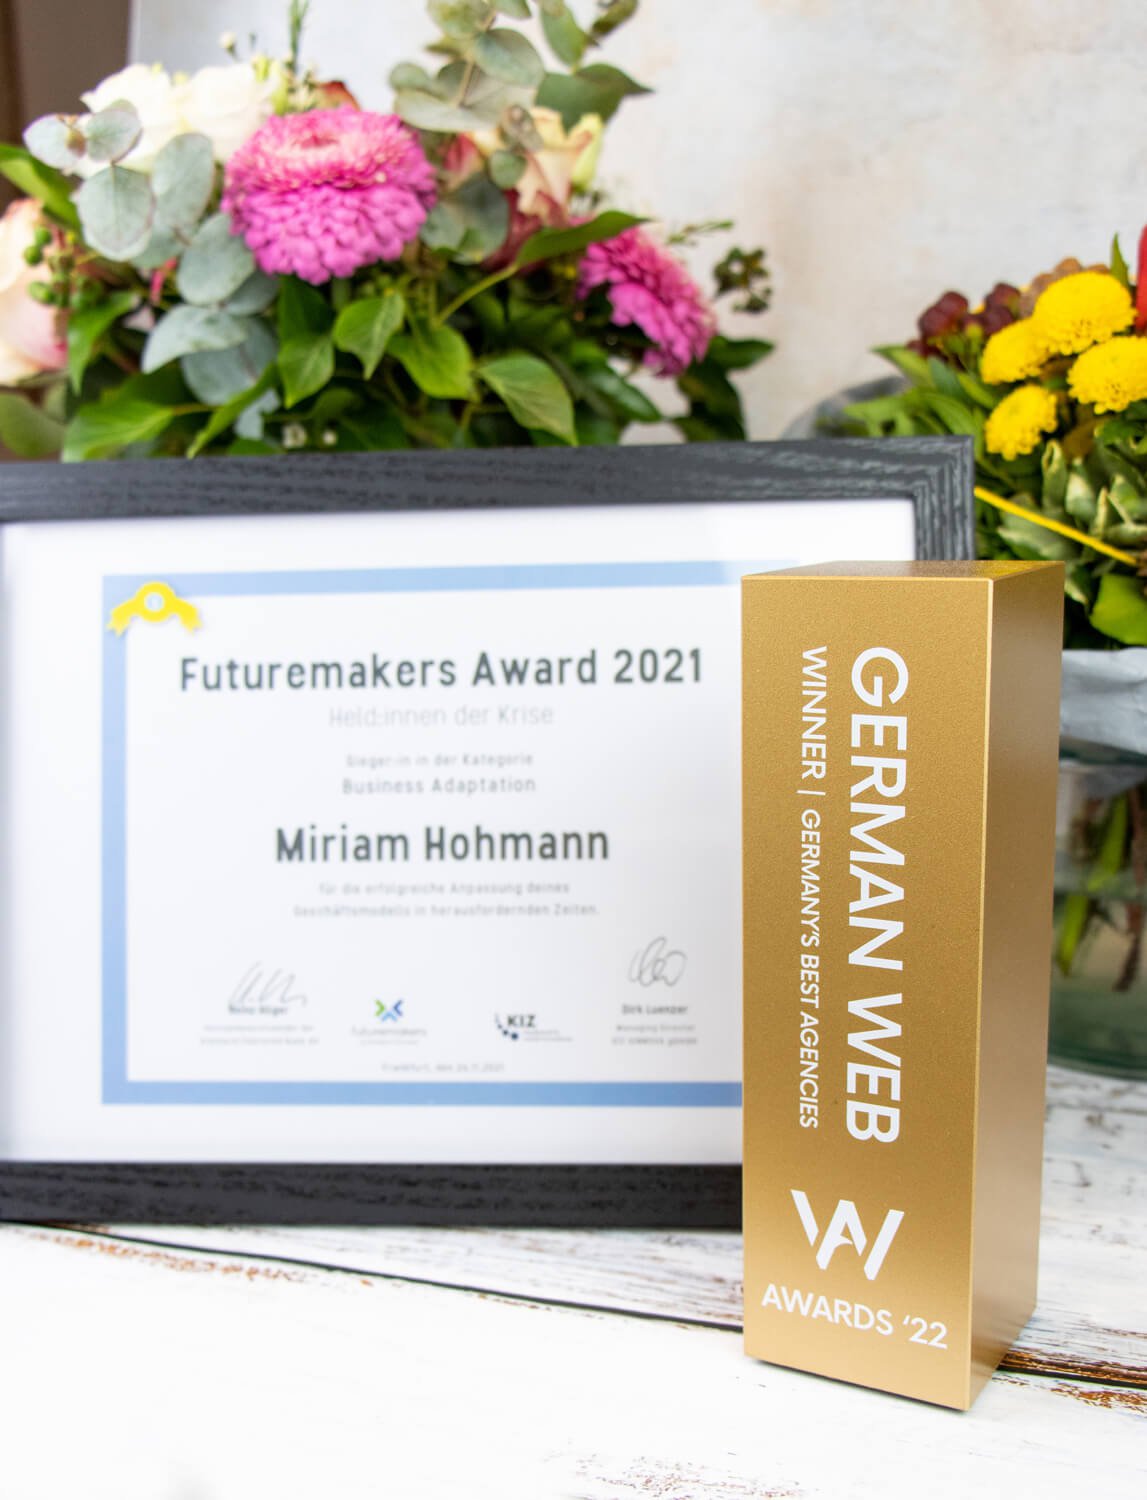 FarbFaible Awards im November: German Web Awards und Futuremakers Award